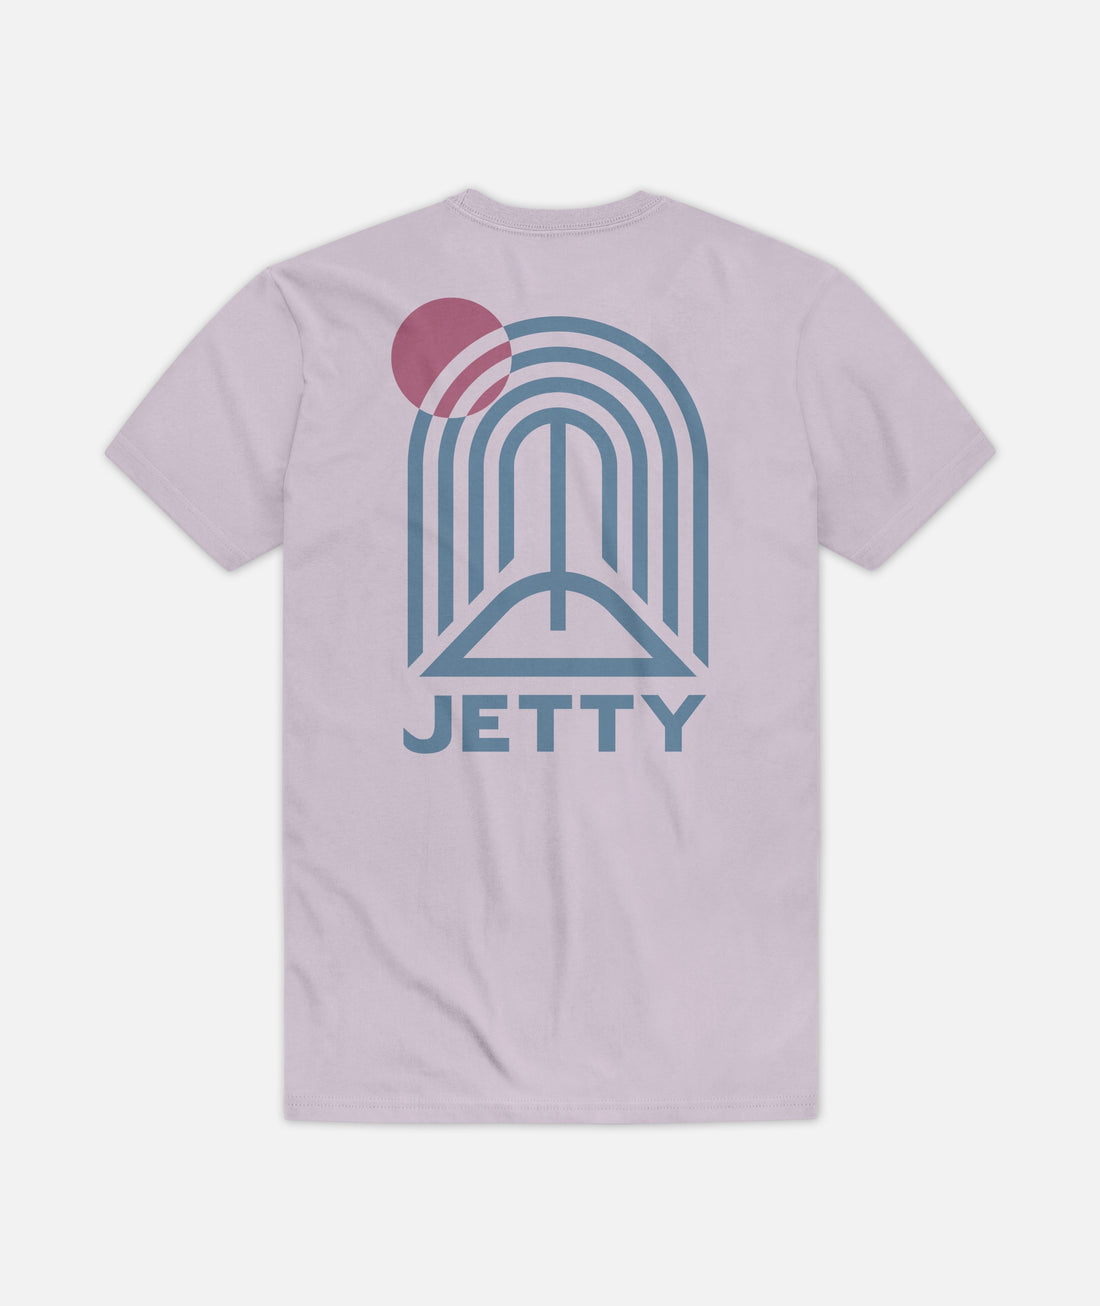 Jetty Men's Komorebi Tee Apparel Jetty Lavender Small 